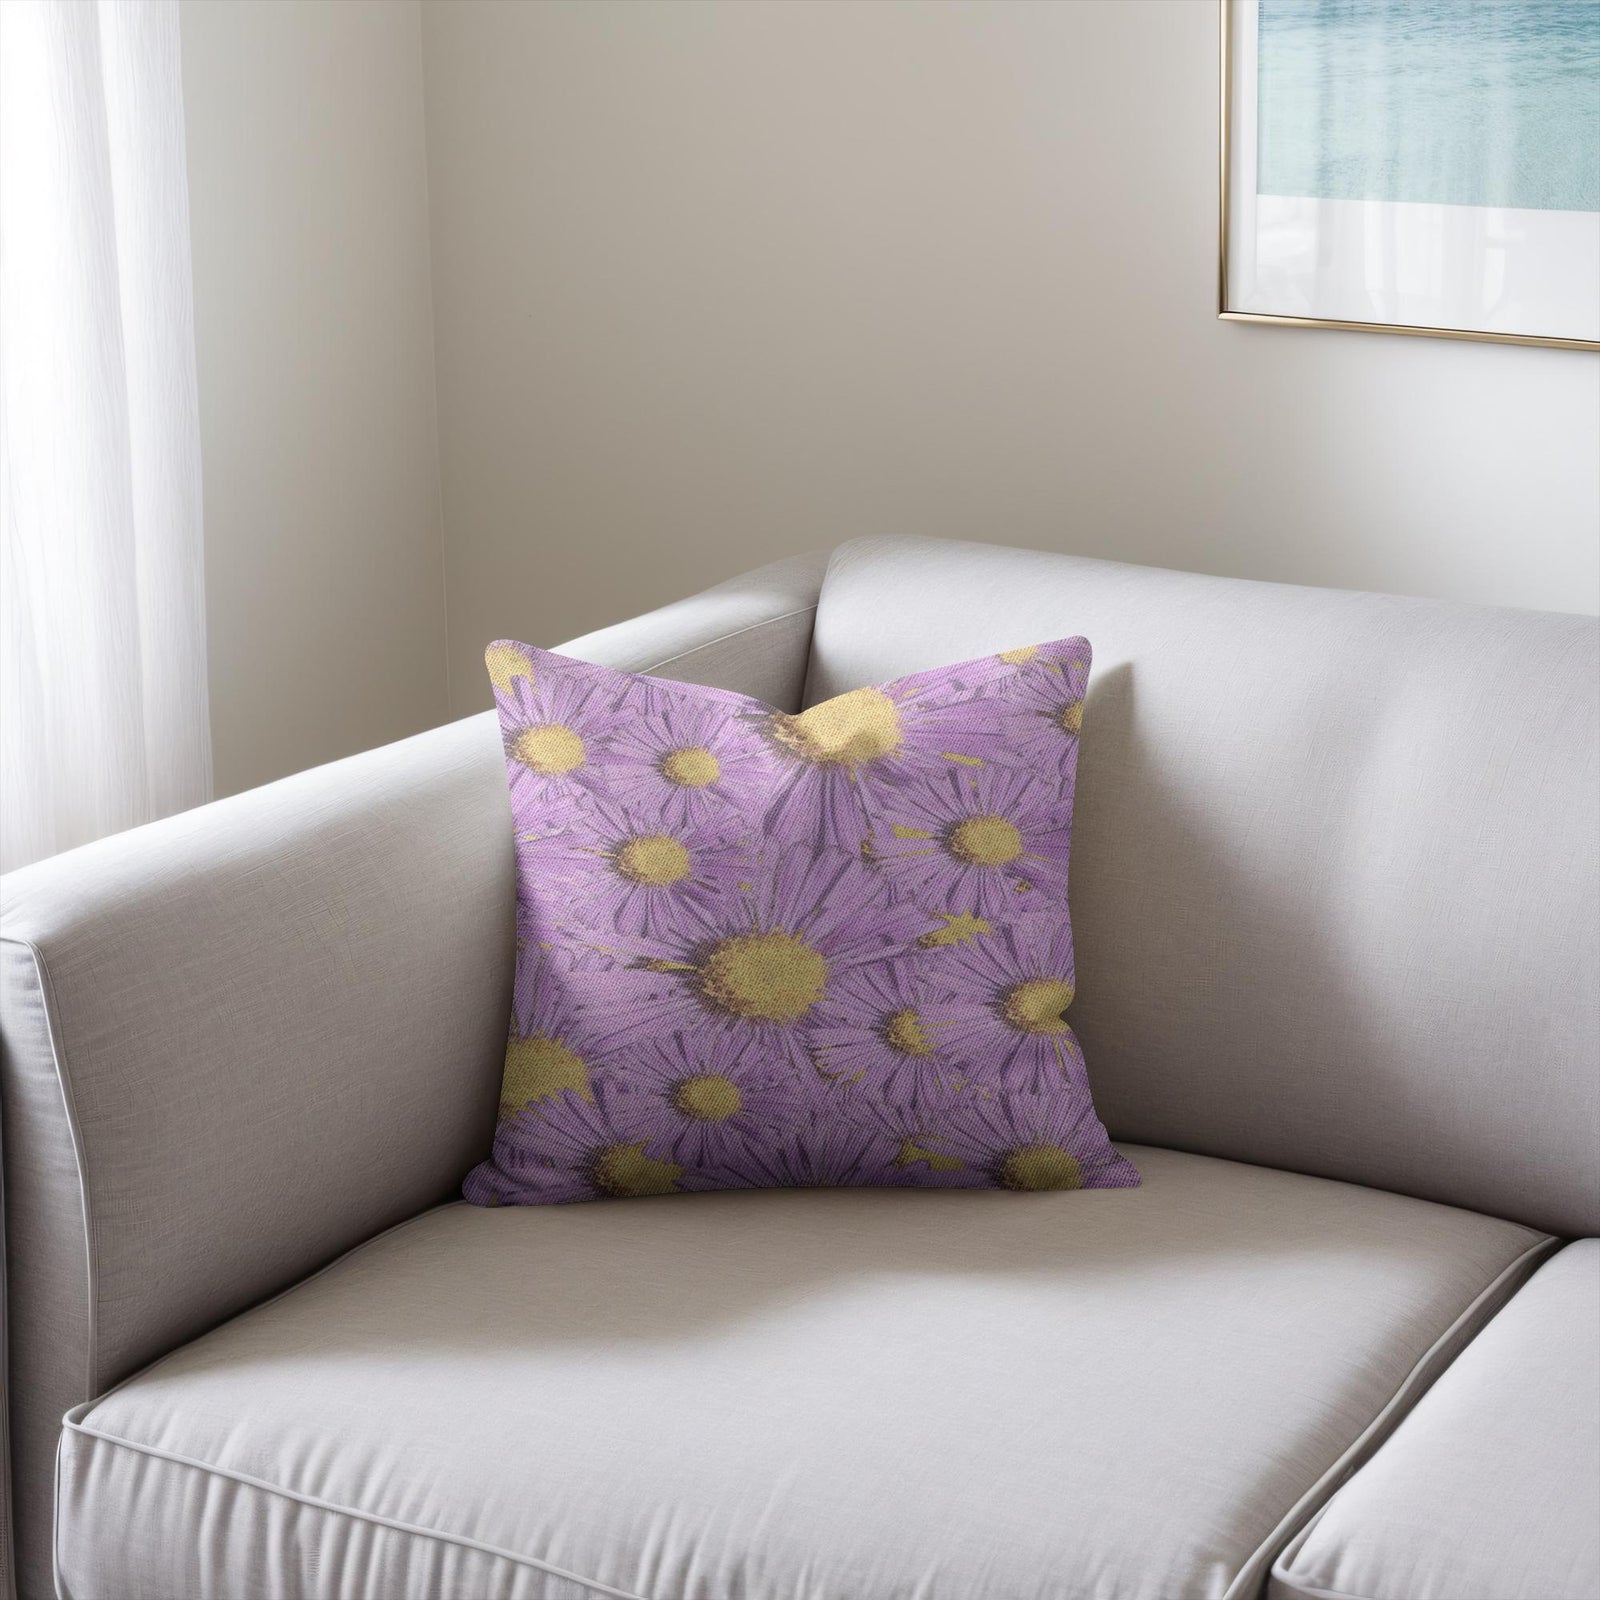 Cotton/poly blend woven pillow purple aster floral pattern